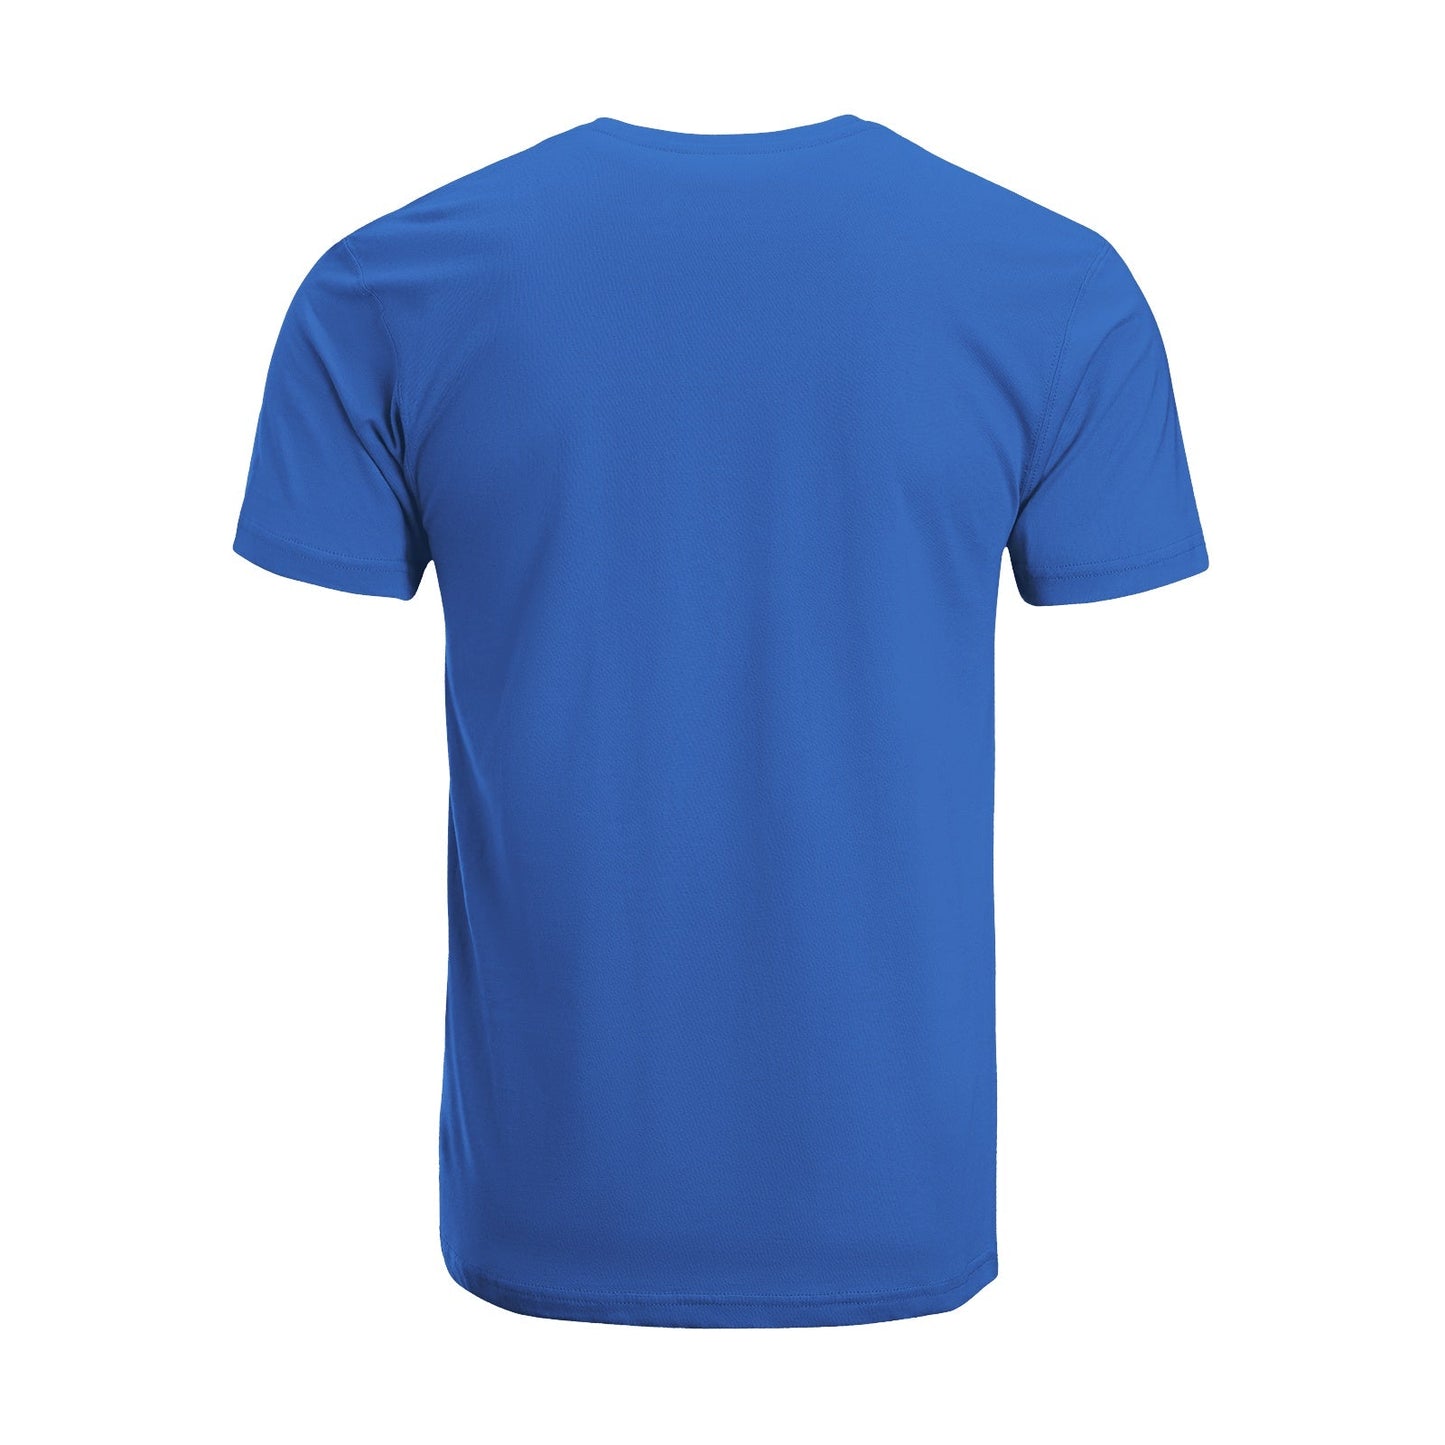 Unisex Short Sleeve Crew Neck Cotton Jersey T-Shirt VEGAN 20